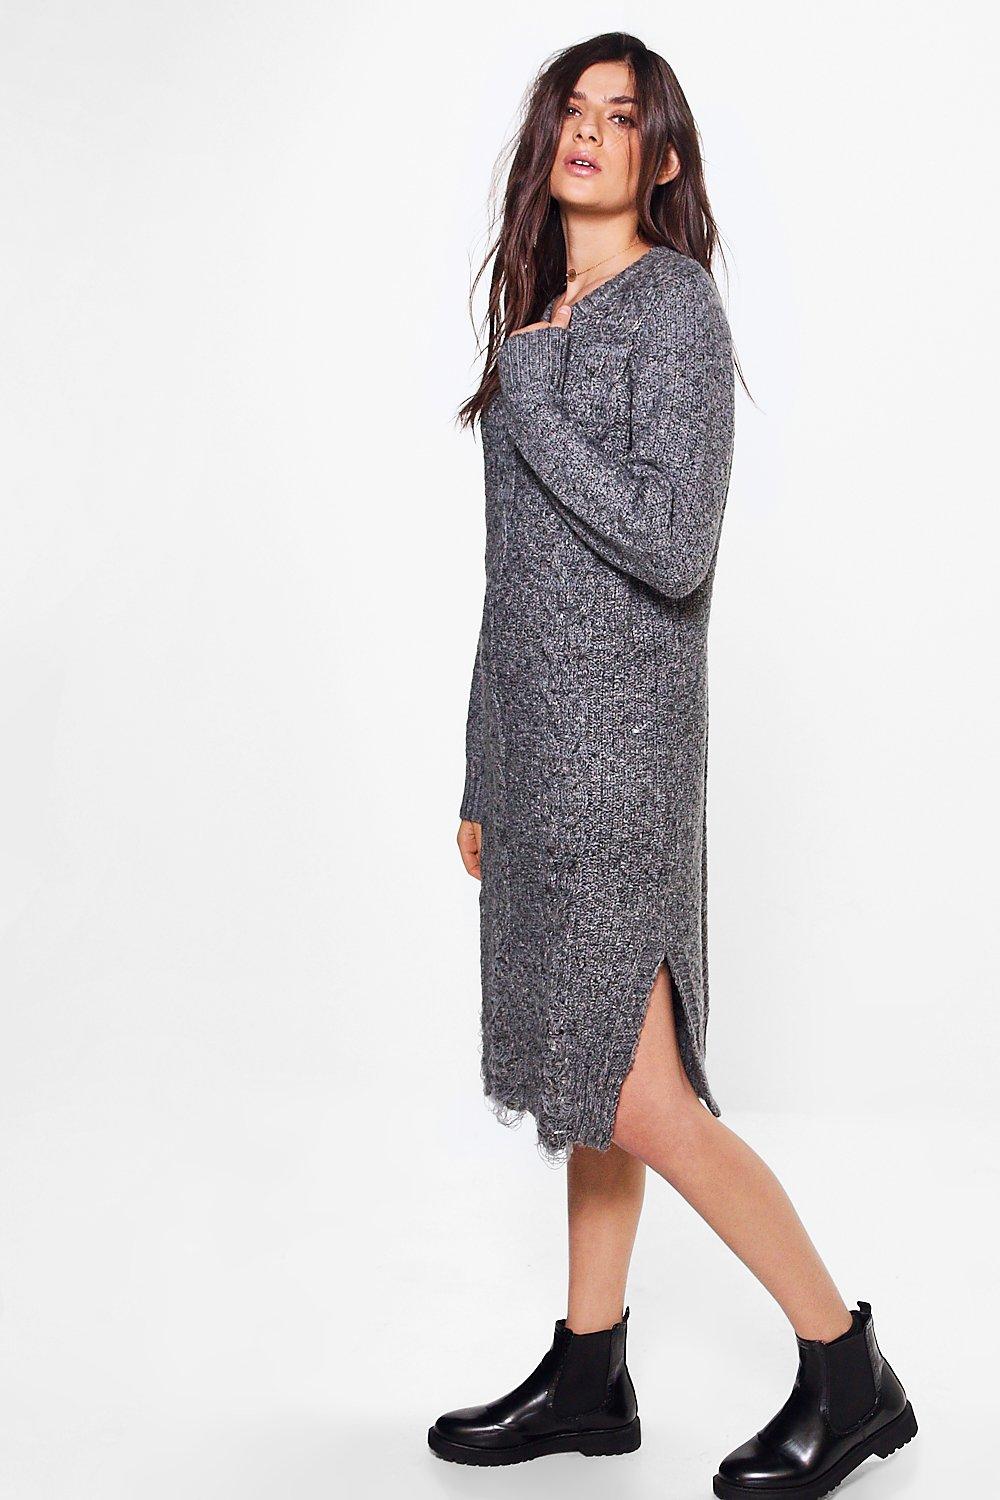 oversized grey jumper dress